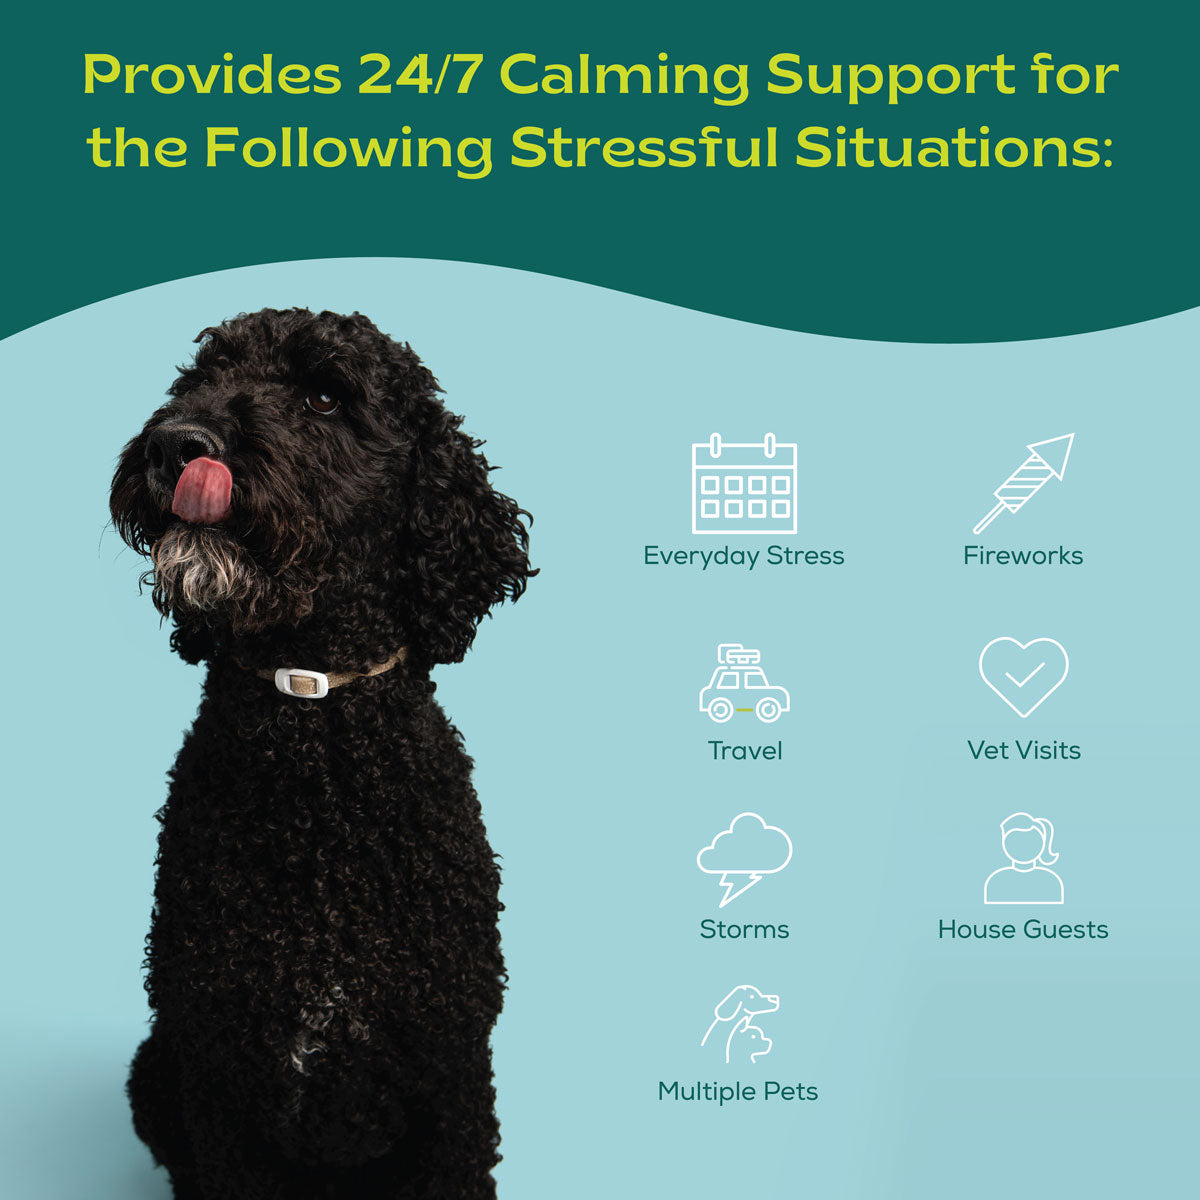 bSerene™ Calming Dog Collar